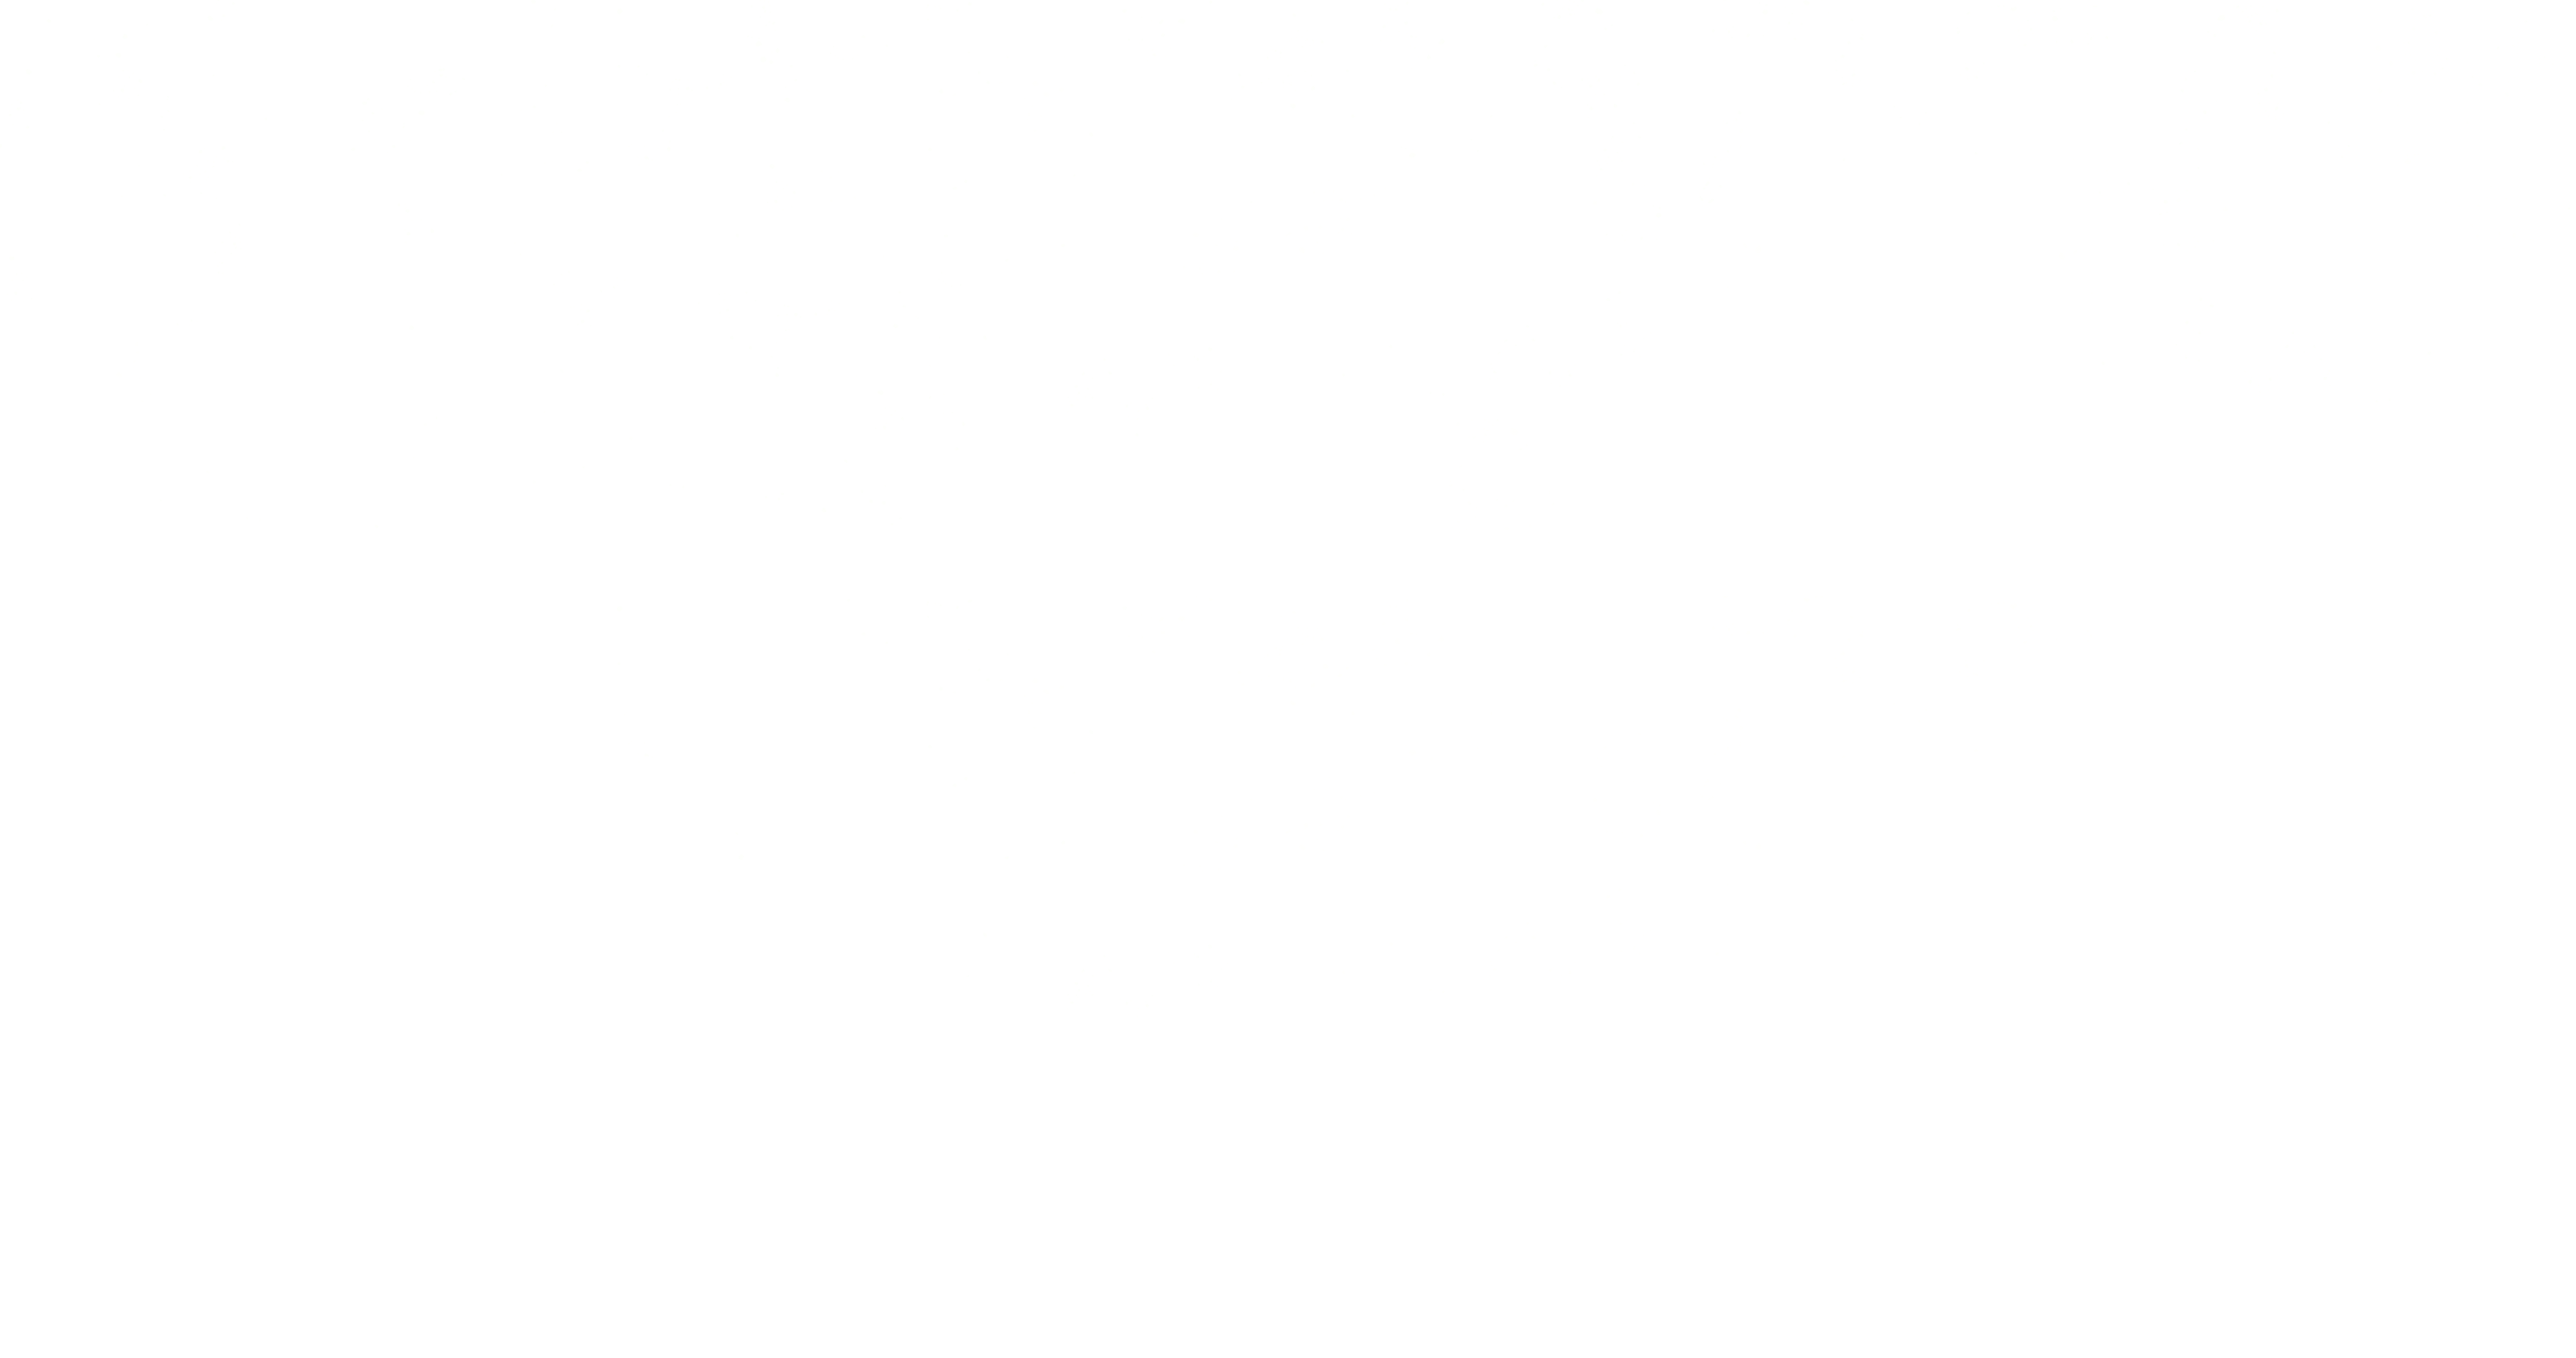 Background image showing stars